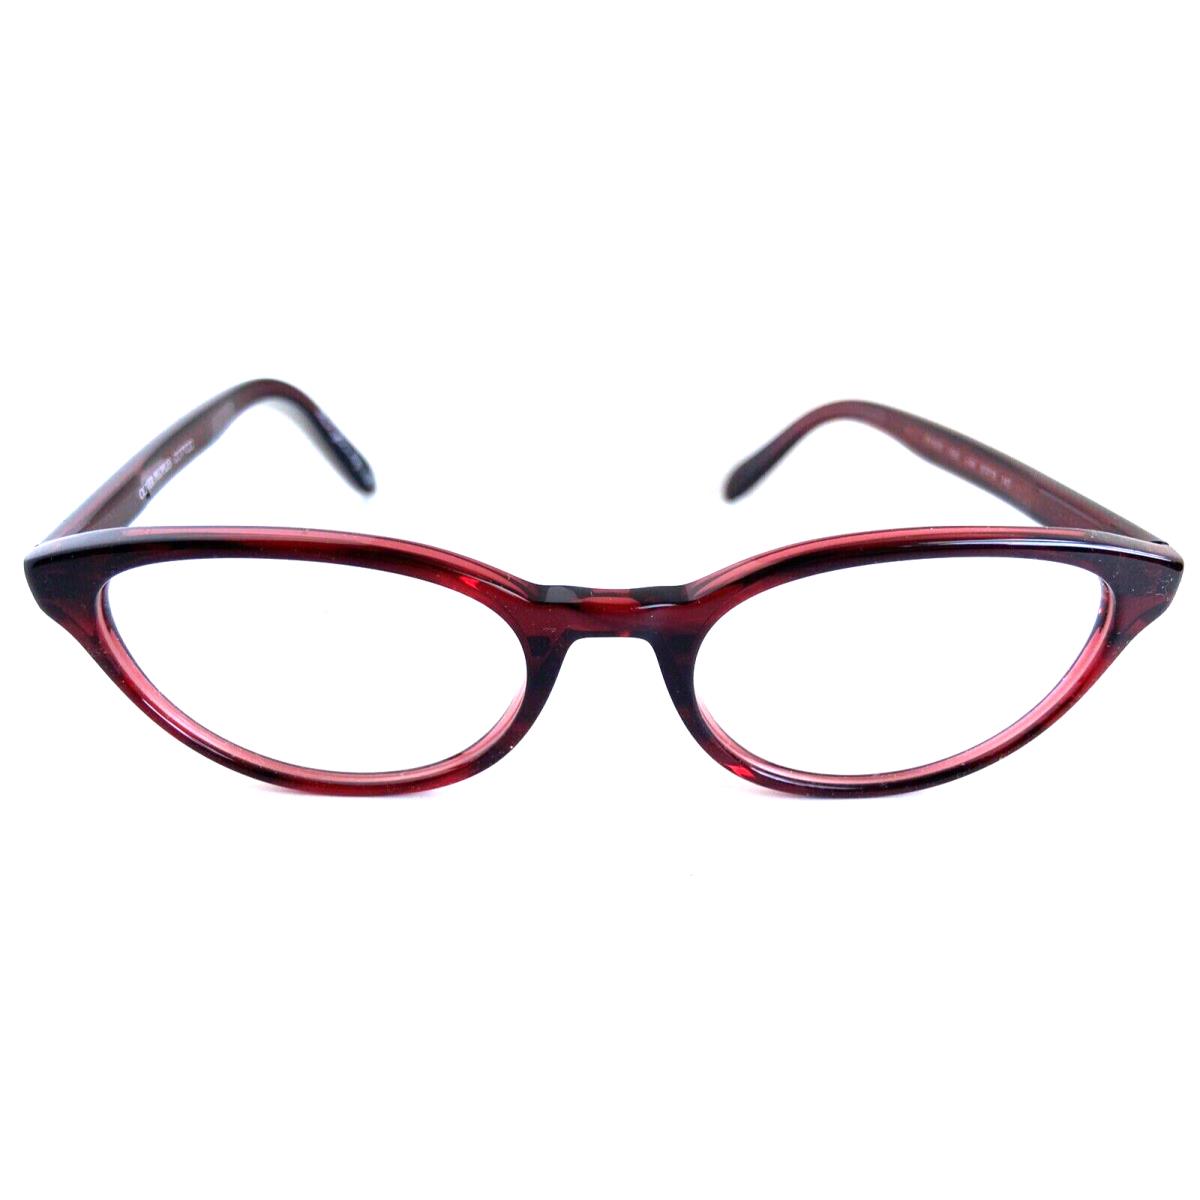 Oliver Peoples OV 5232 Lilla 50mm Burgundy Cat Eye Woman s Eyeglasses Frame